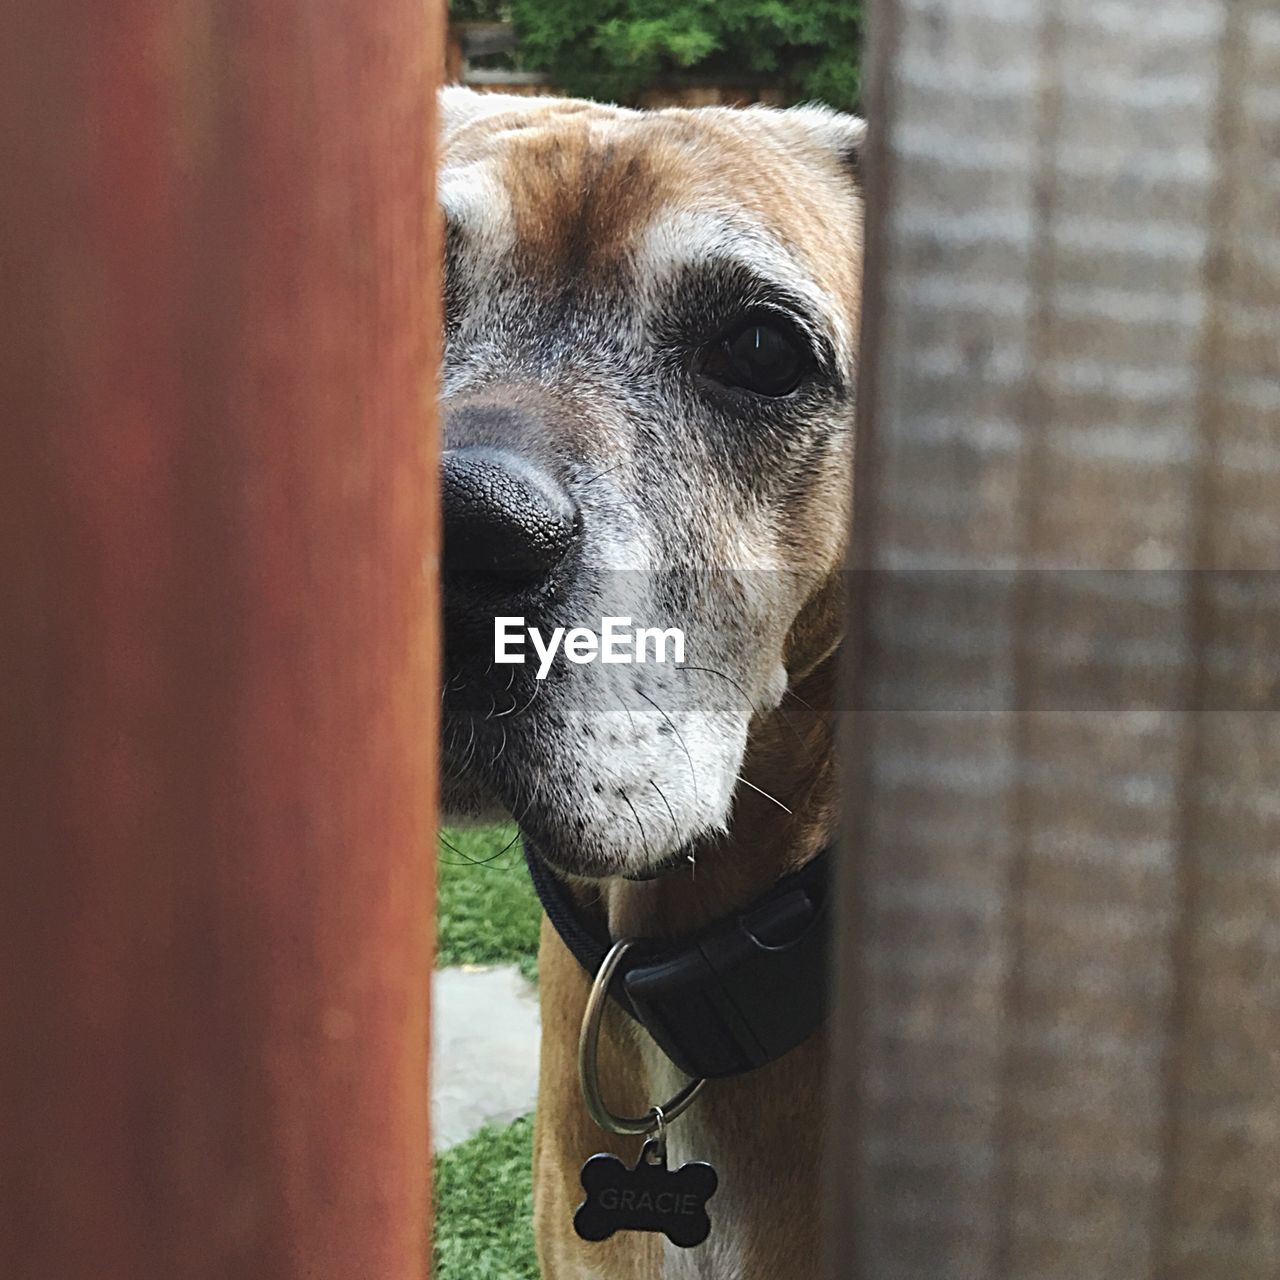 Dog seen through wooden fence